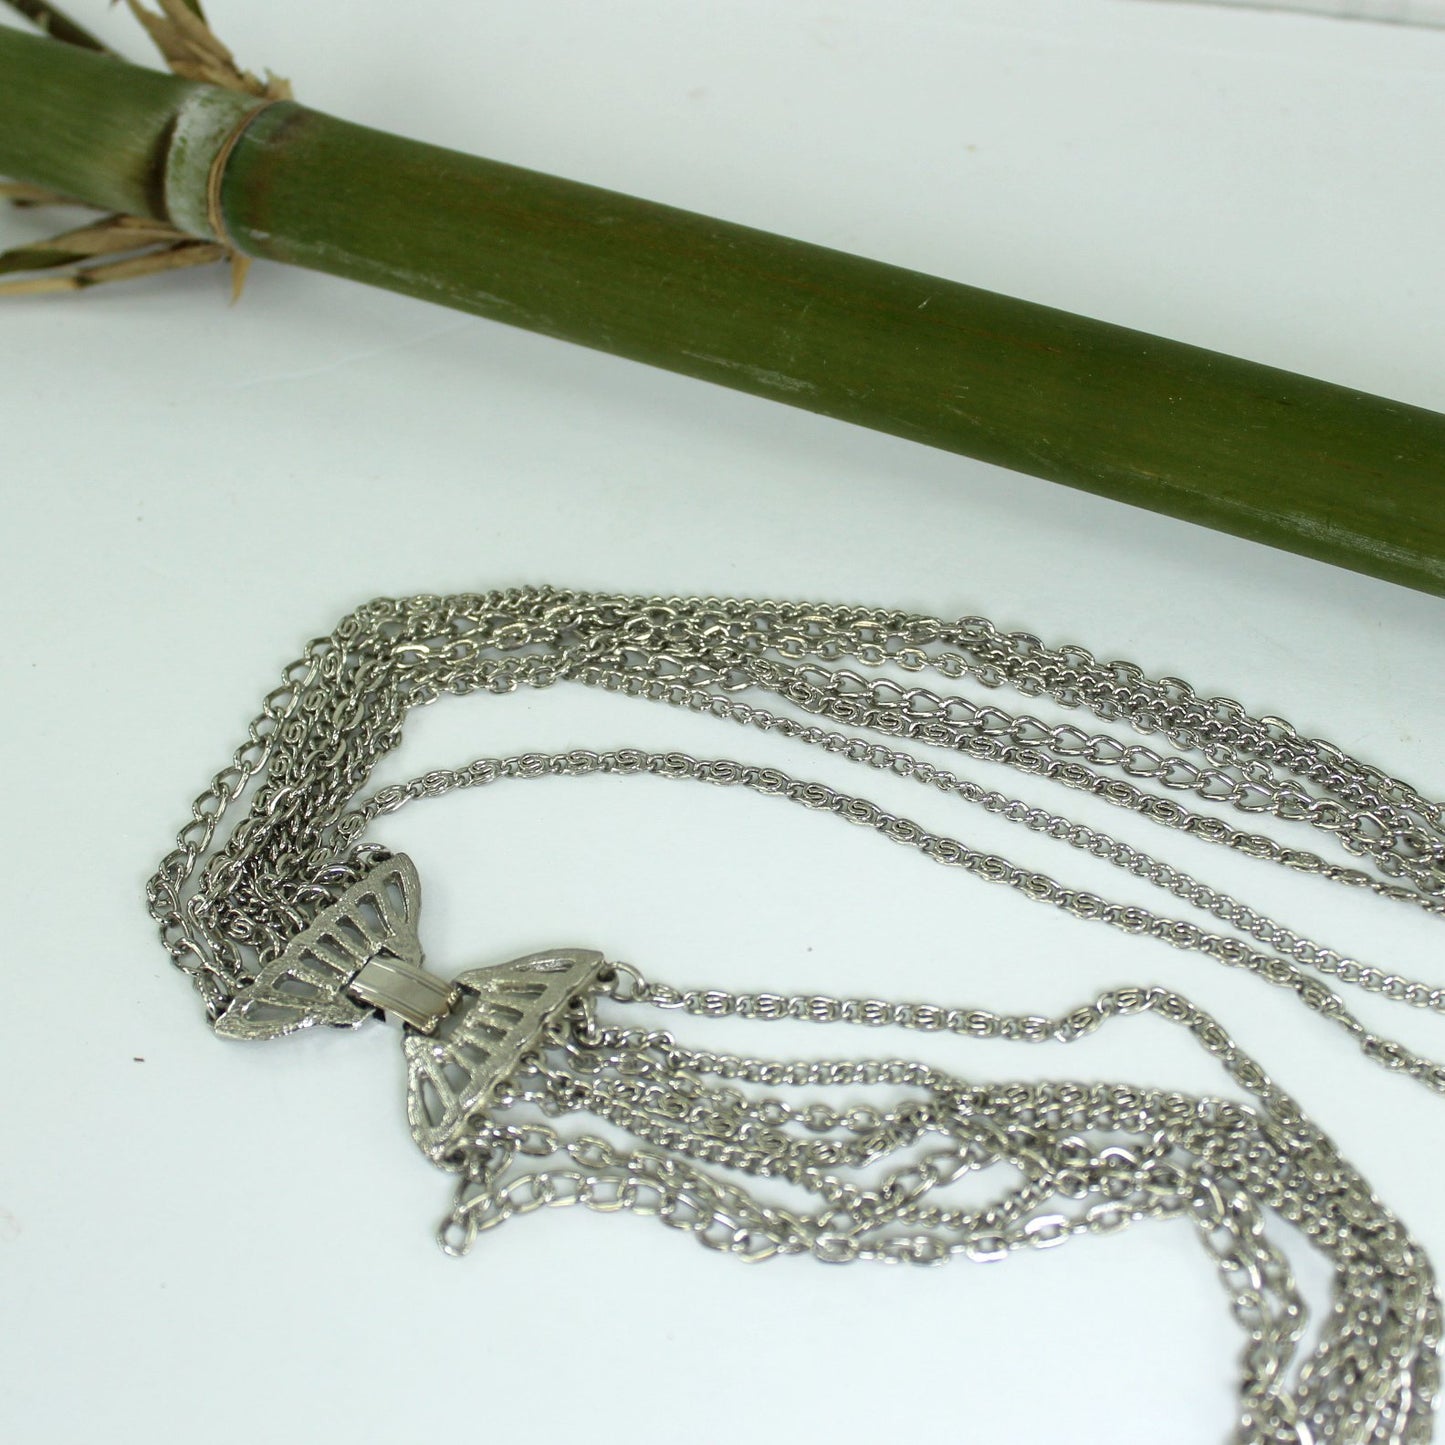 Vintage Necklace 7 Silver Chains Graduated Lengths Large Silver Clasp closeup clasp